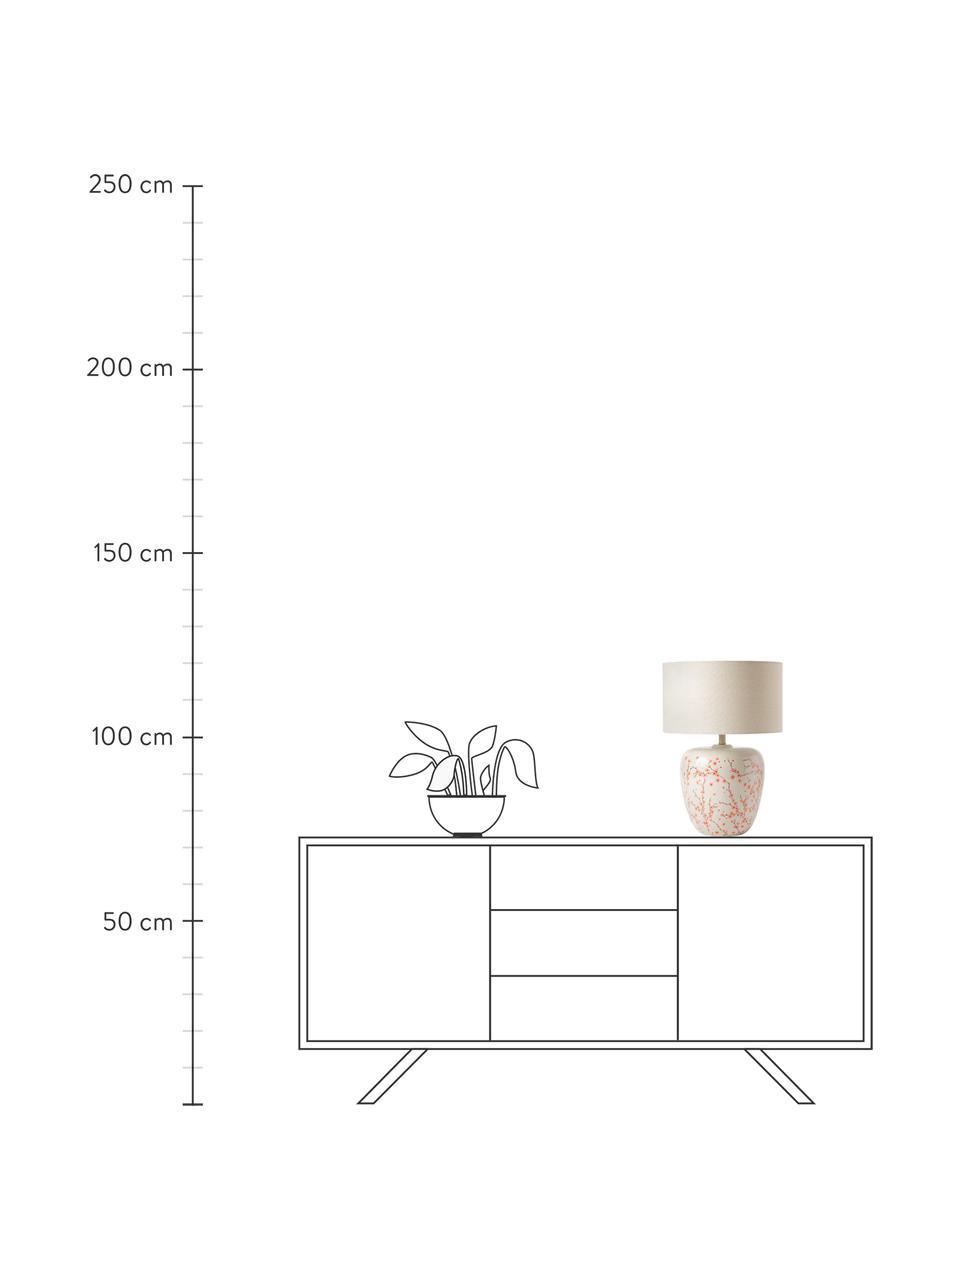 Lampada da tavolo grande in ceramica Eileen, Paralume: 100% poliestere, Base della lampada: ceramica, Beige lucido, Ø 33 x Alt. 48 cm